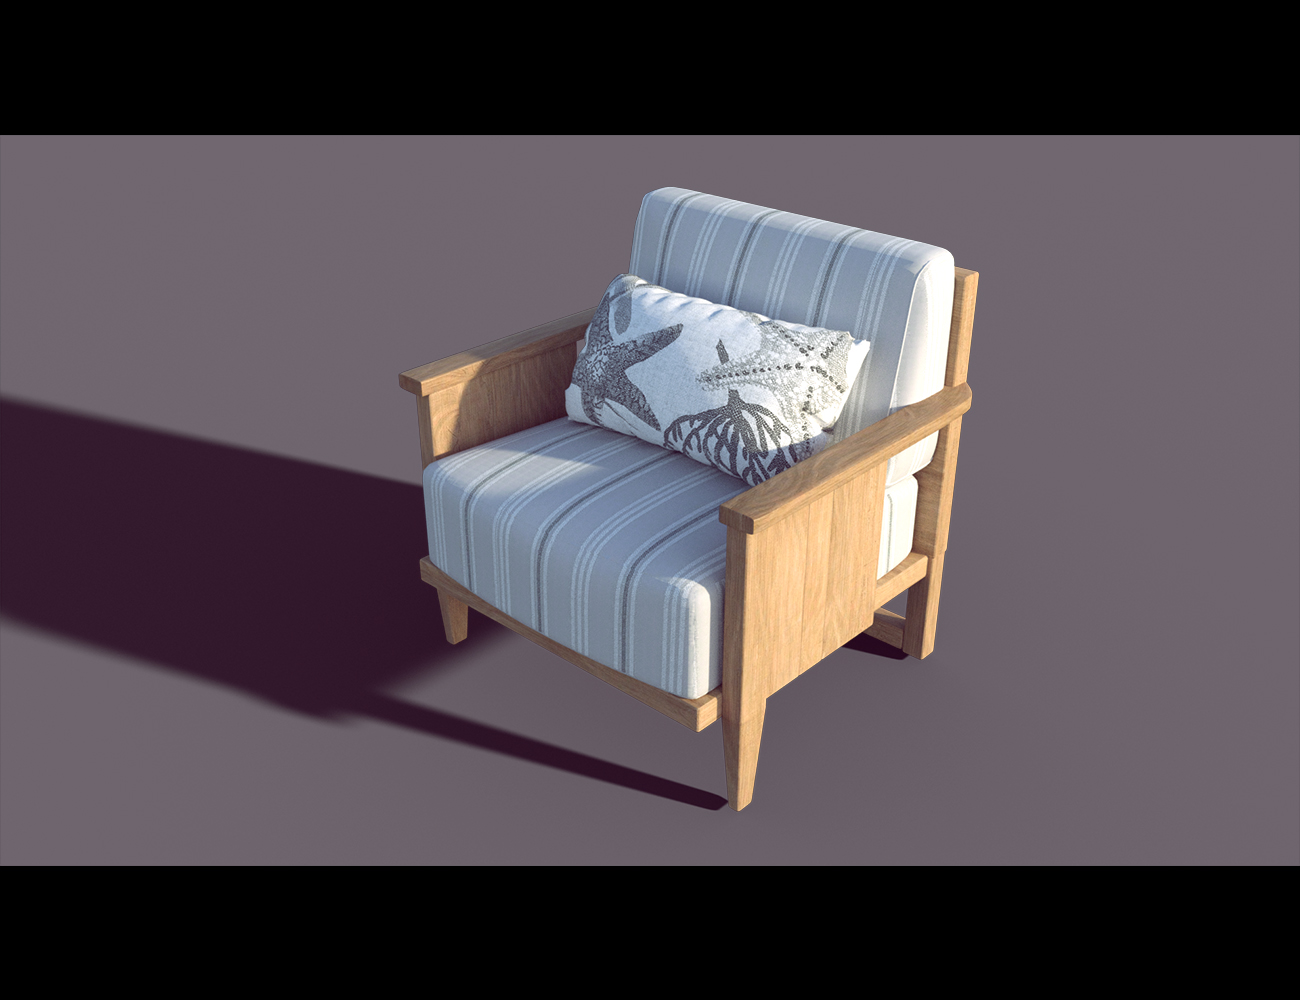 Honeymoon Living Room Props by: Polish, 3D Models by Daz 3D